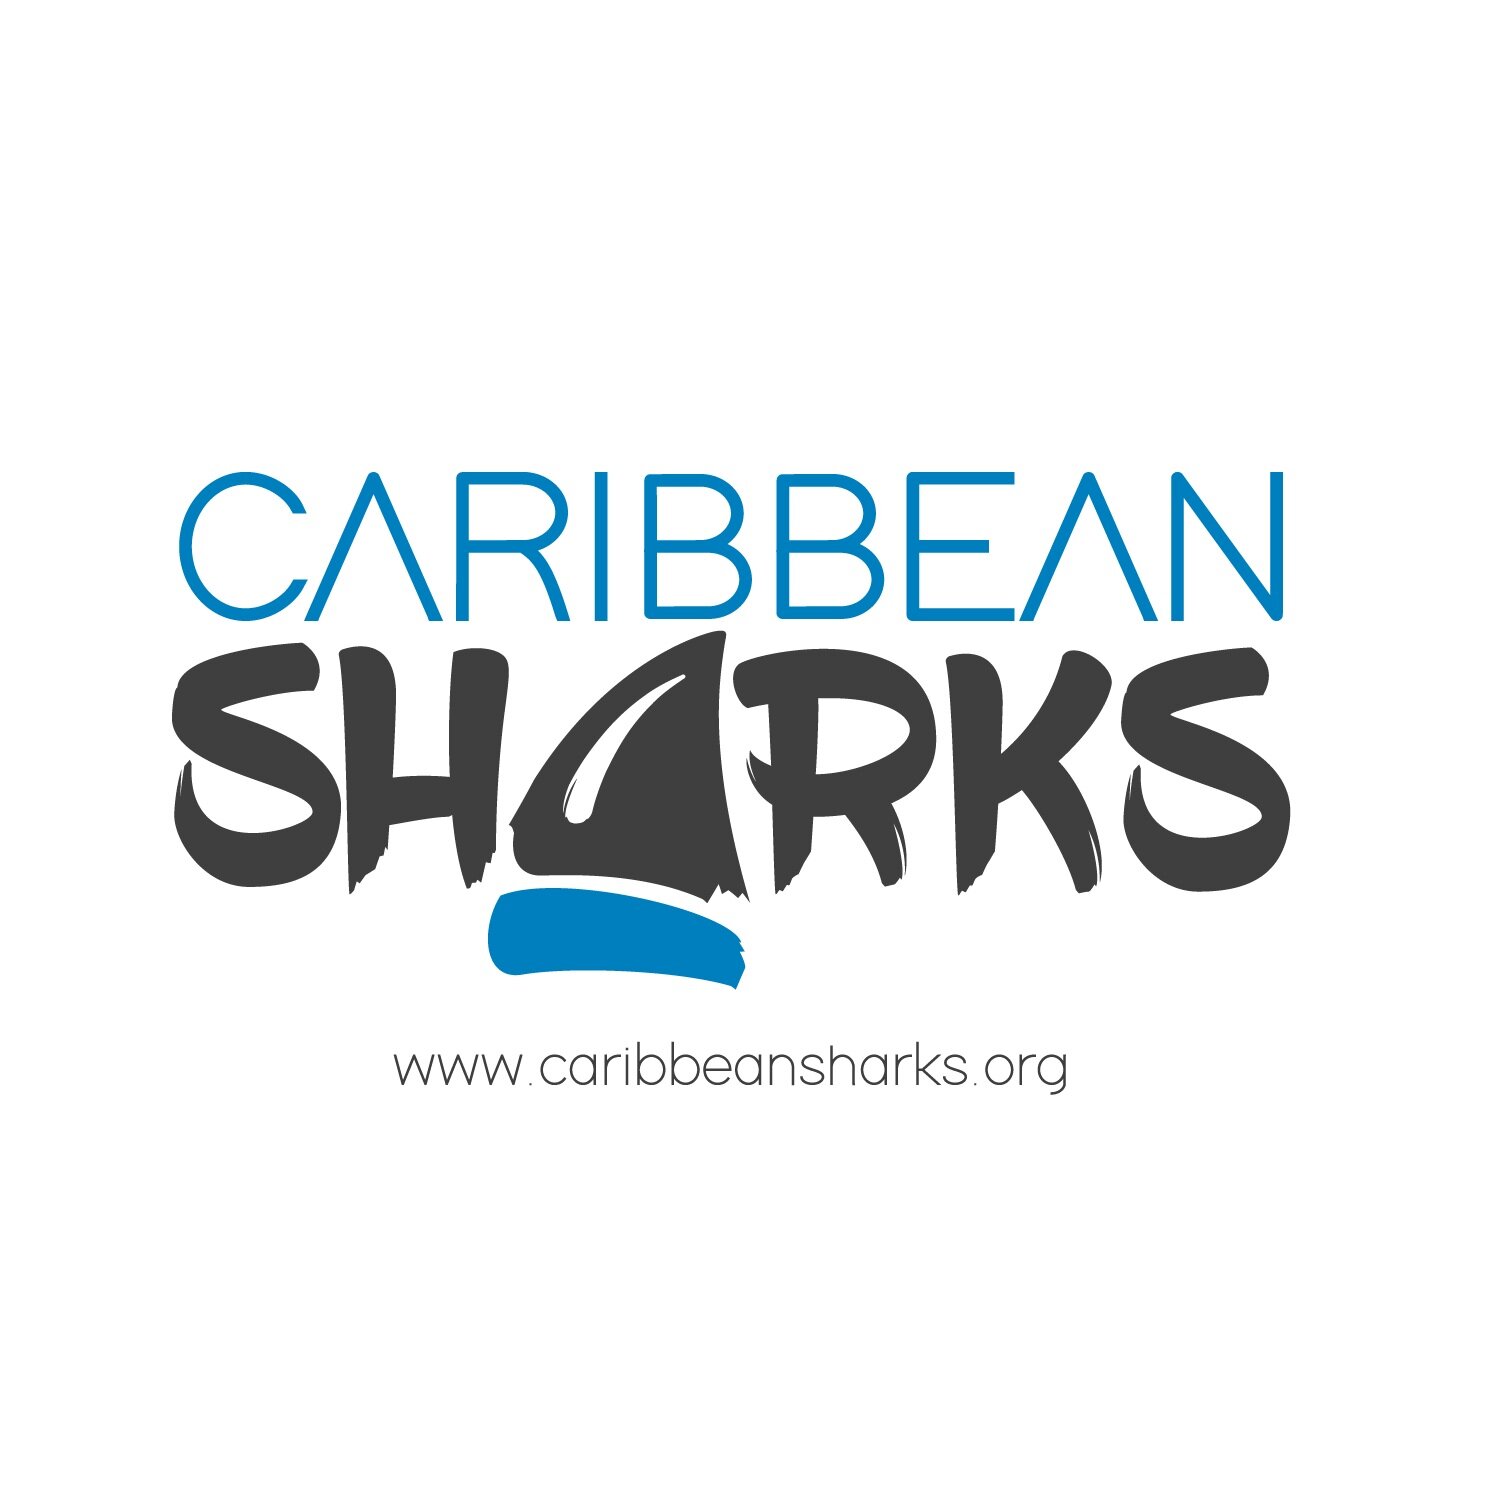 Caribbeansharks.org